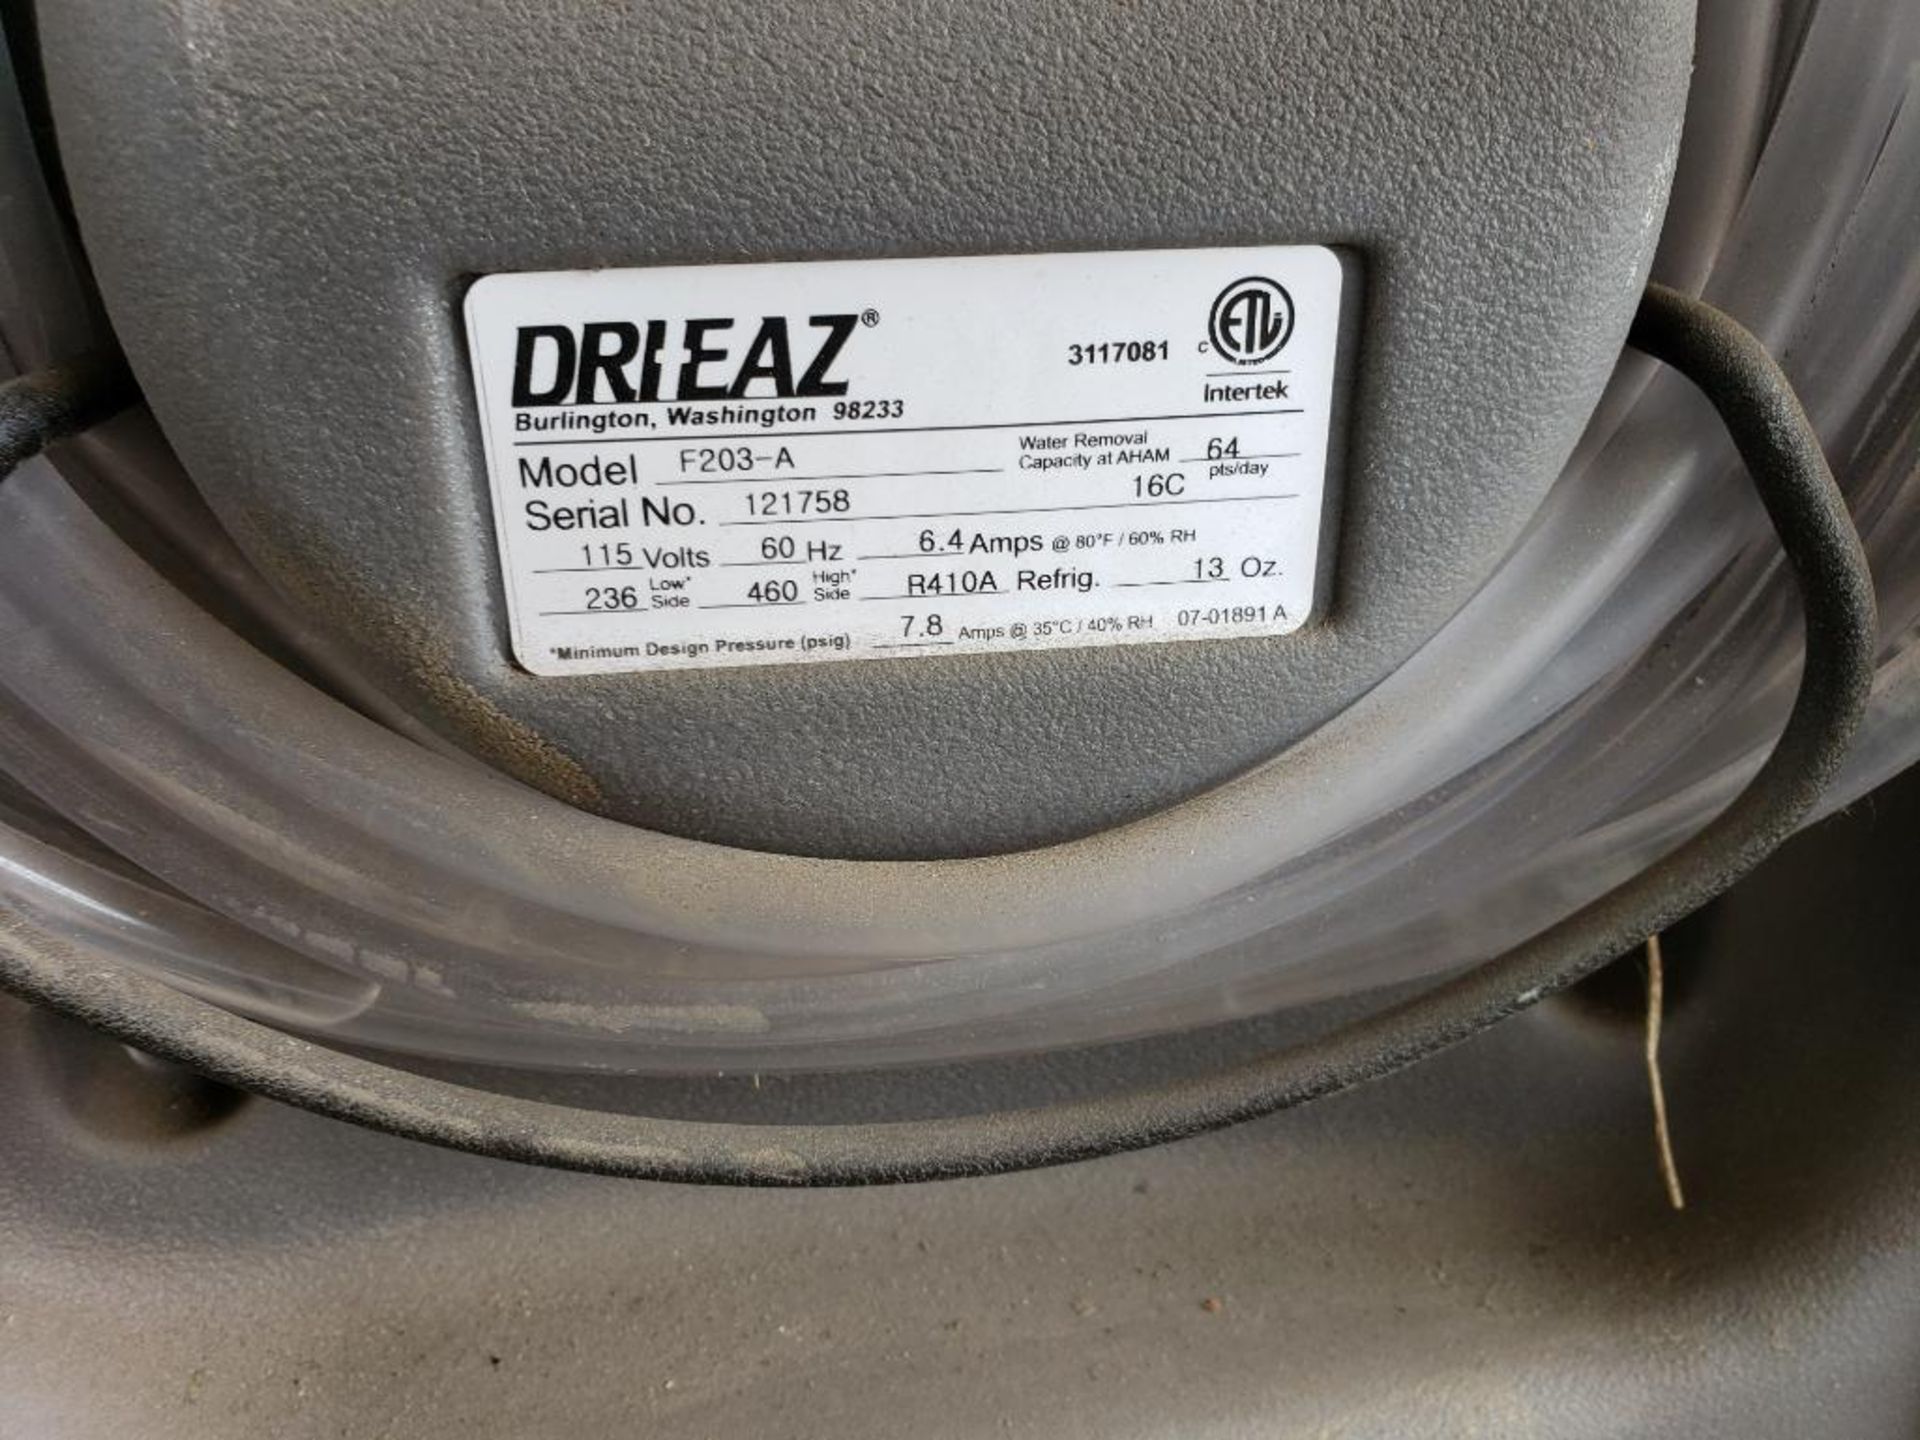 Dri-Eaz Drizair 1200 professional dehumidifier. F203-A, 115V. - Image 7 of 7